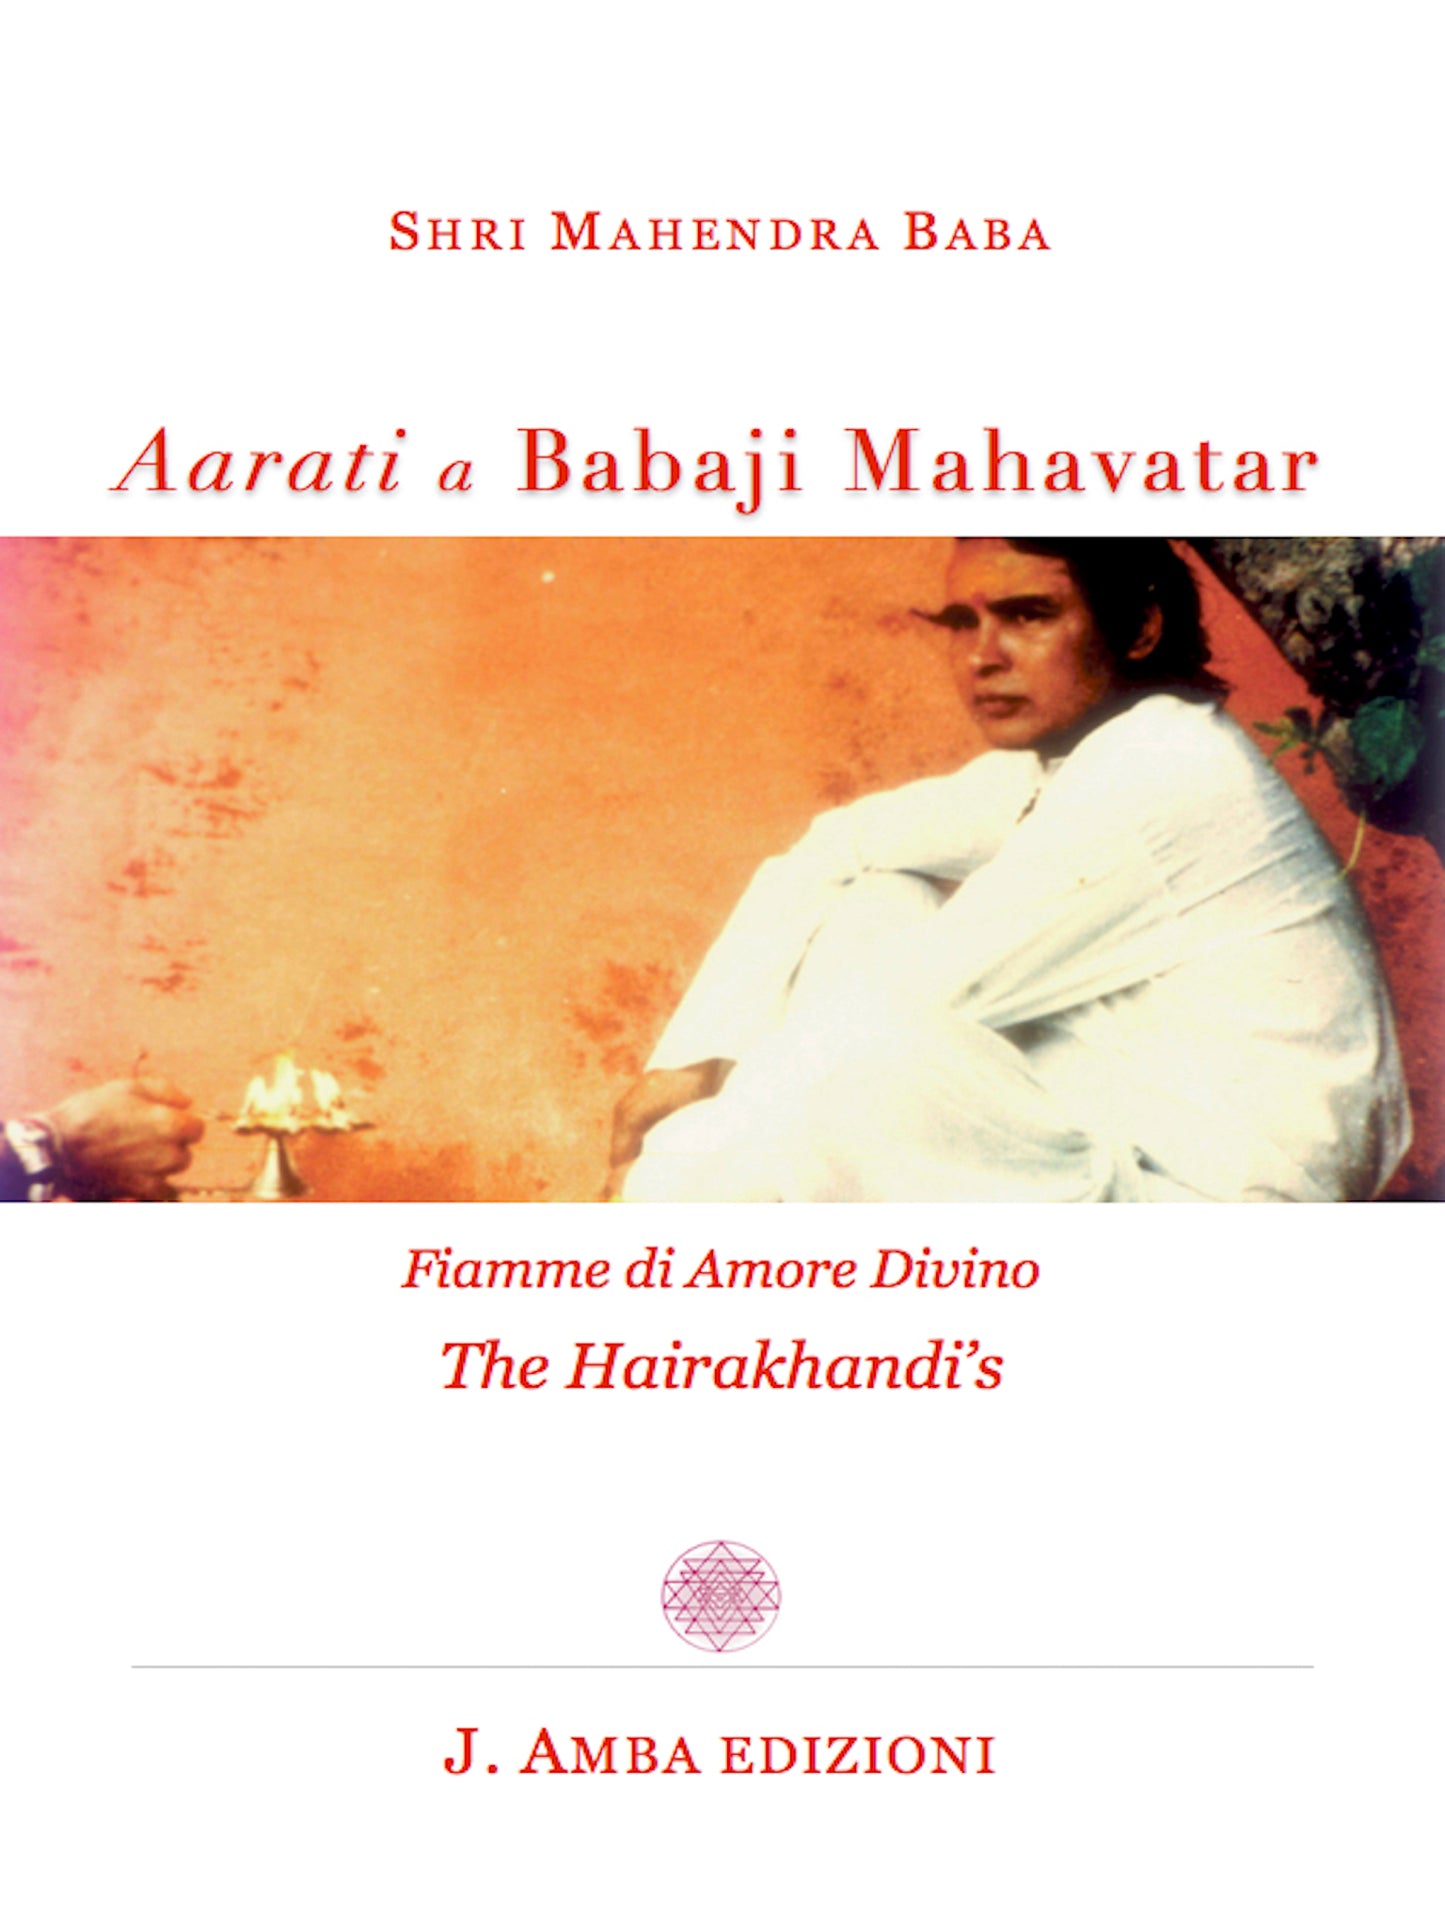 Aarati to Babaji Mahavatar, Mantra & Bhajans - Sanatan Dharma Spirituality Book & Music Therapy for Meditation by Mahendra Baba